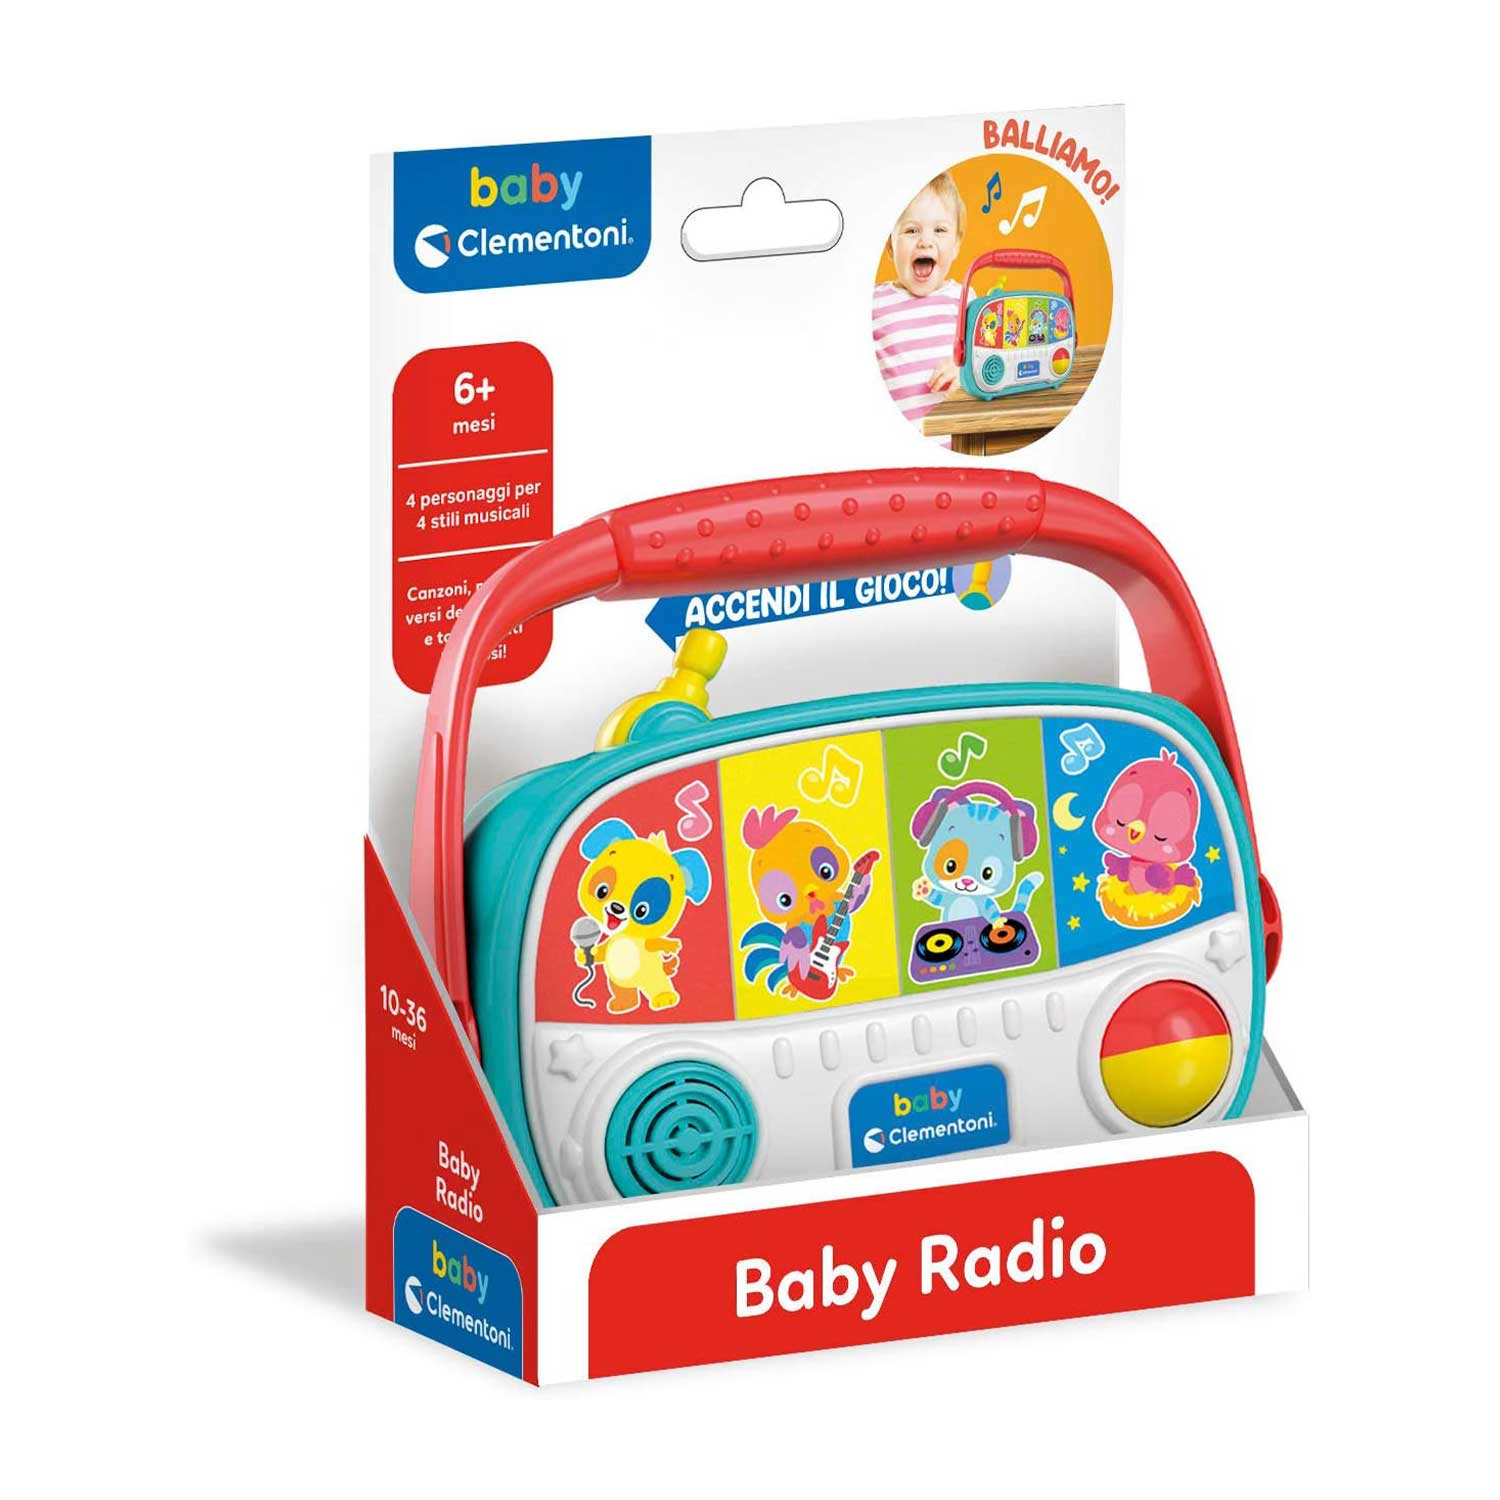 CLEMENTONI - Baby Radio - Mod: CLM17439